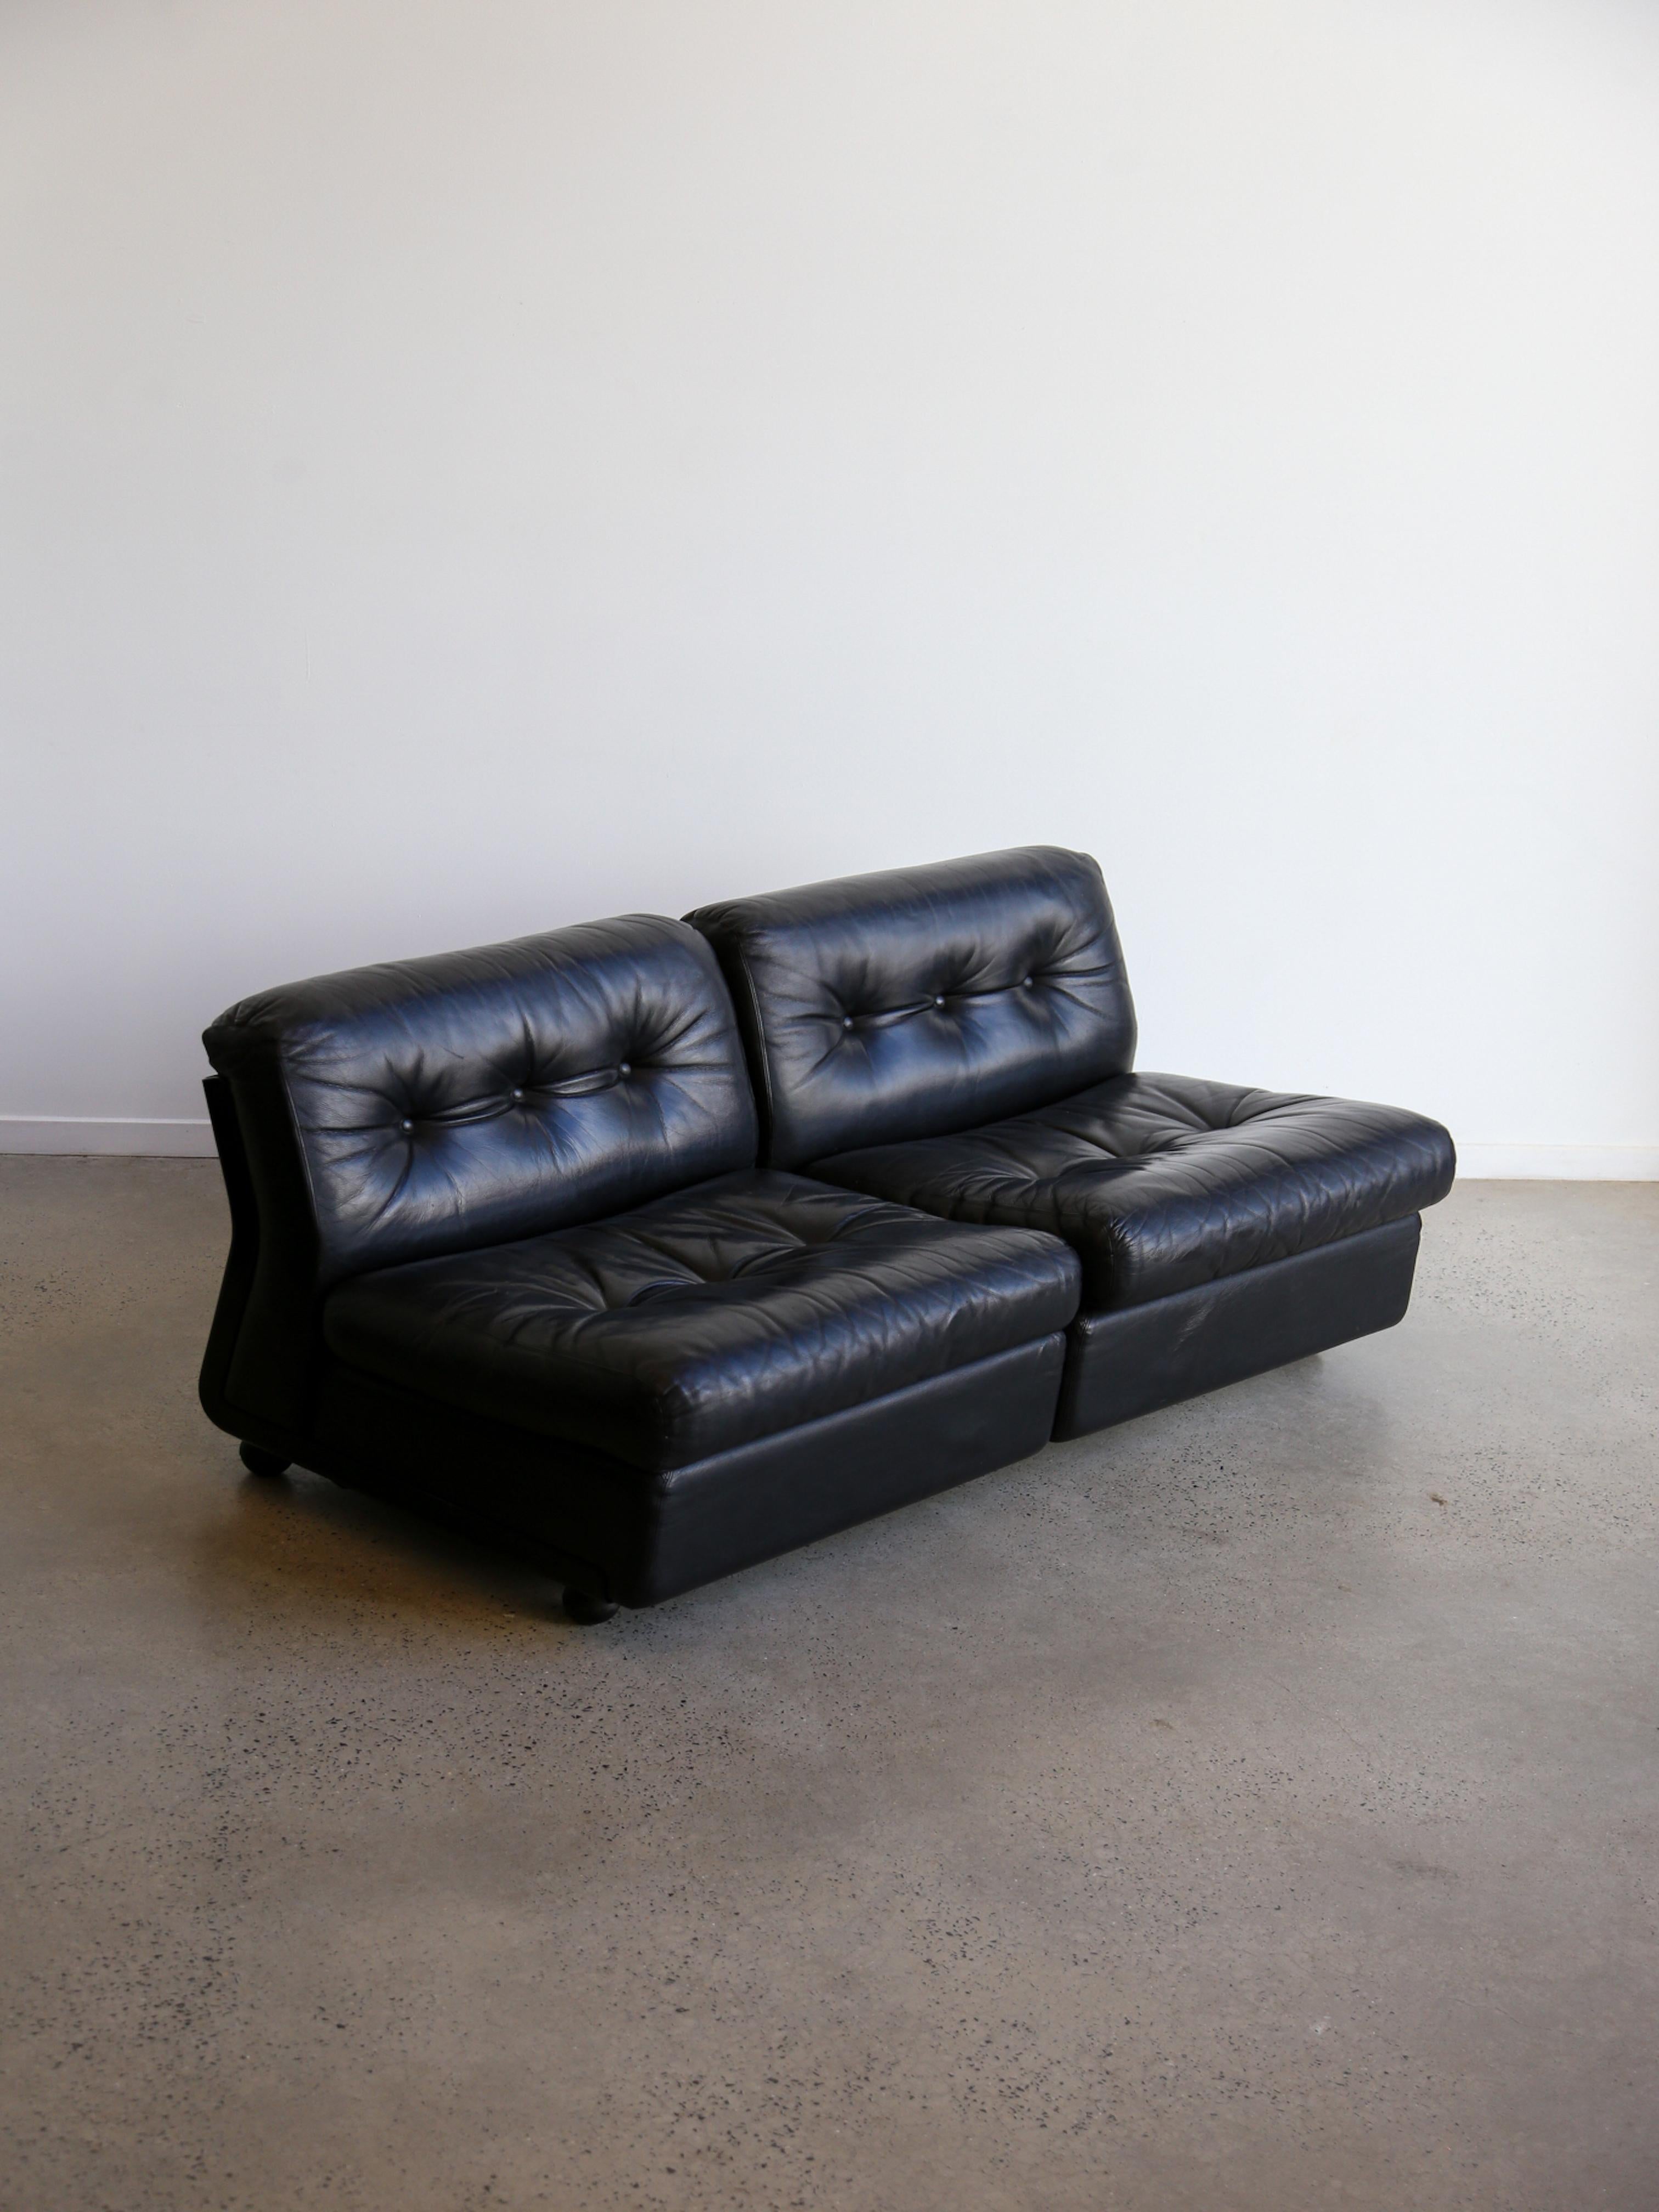 Late 20th Century Amanta Modular Sofa in Black Leather By Mario Bellini for B&B Italia 1970 For Sale